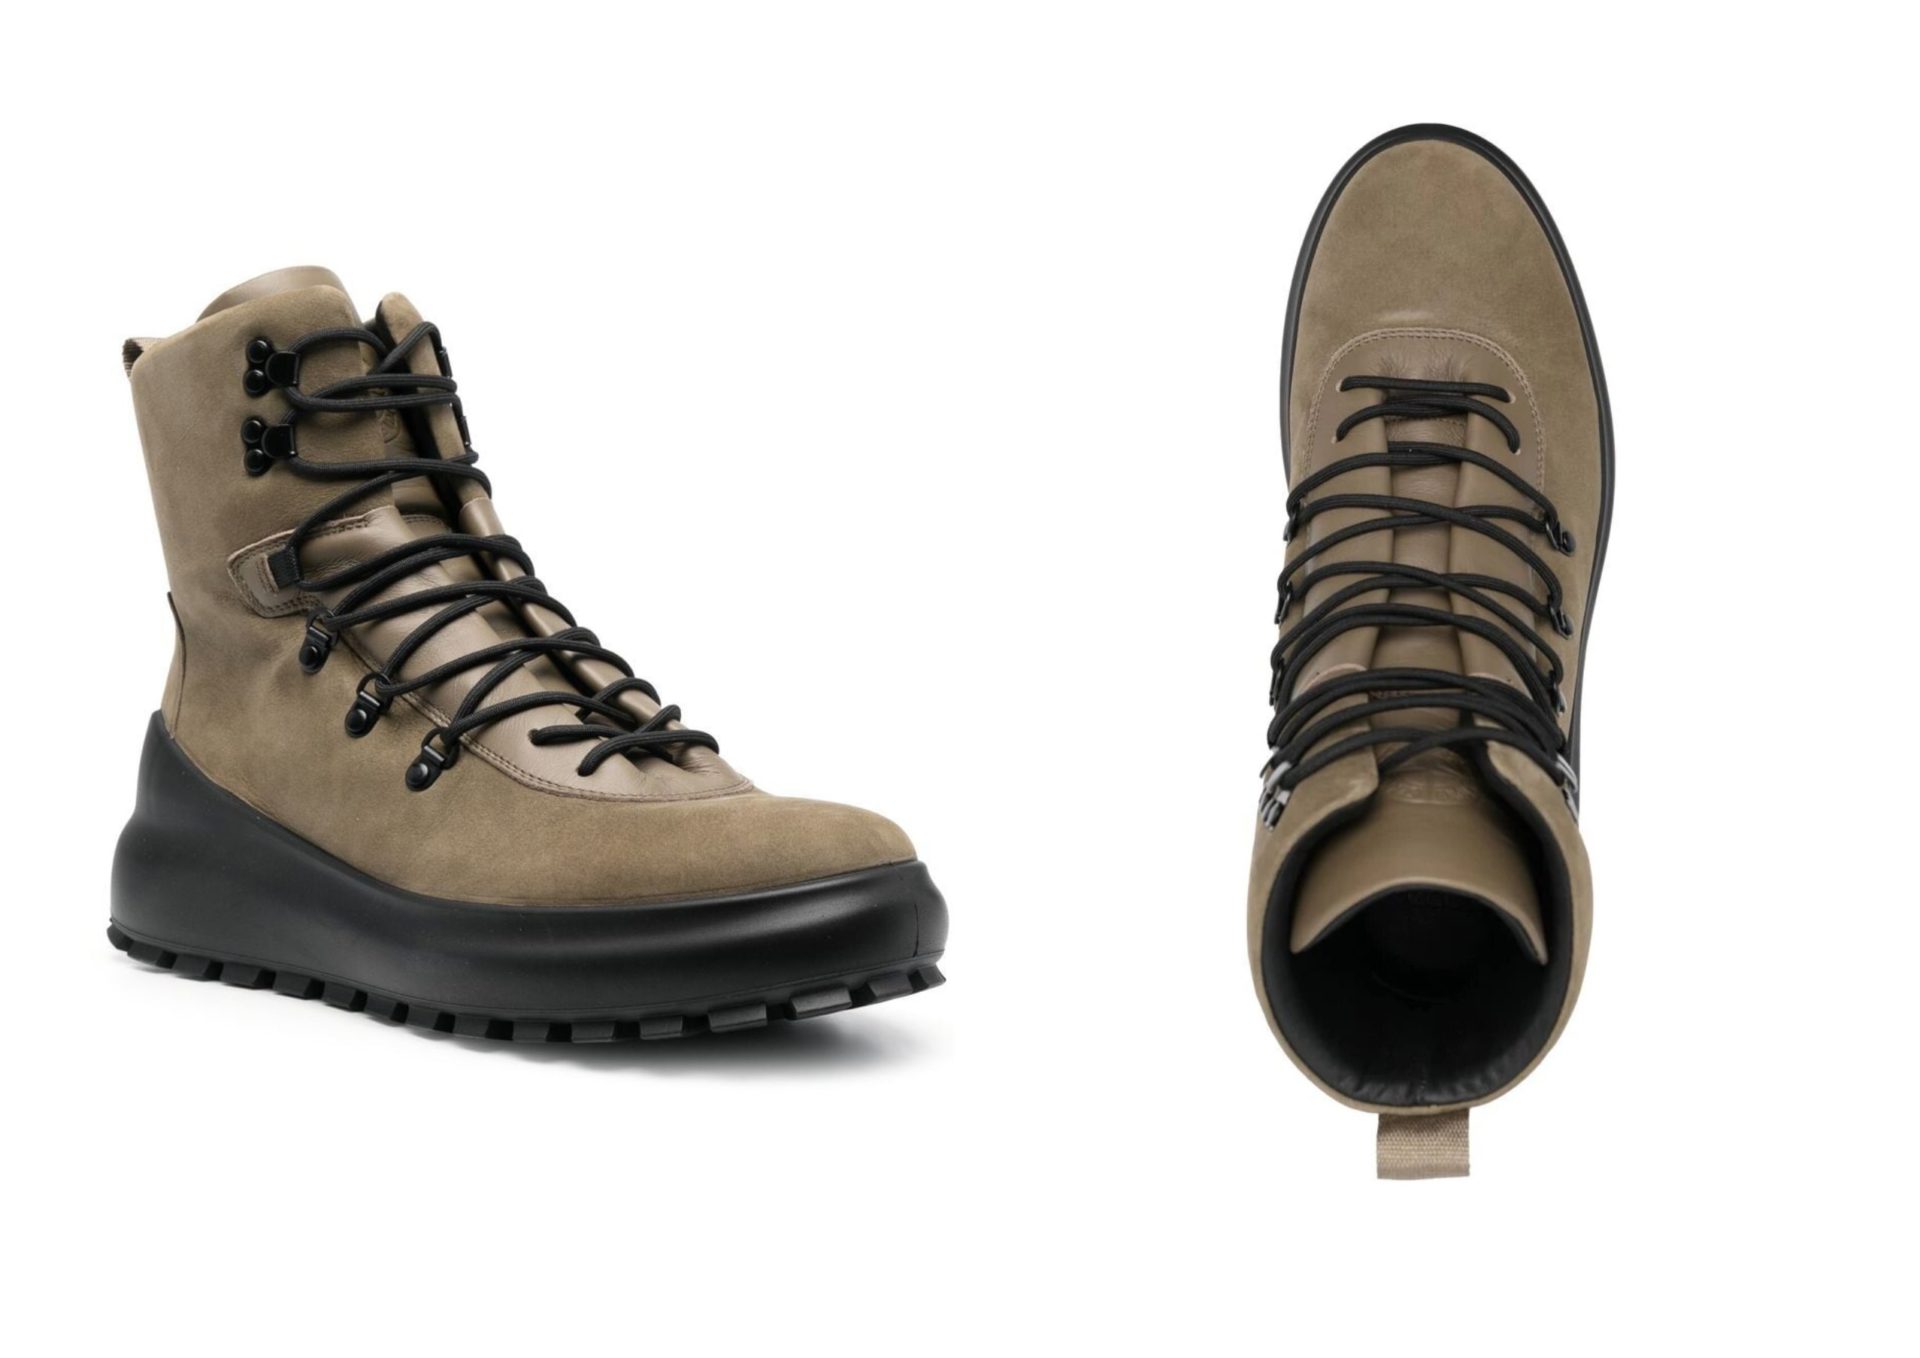 Броги Off-White, кроссовки Axel Arigato и ботинки Moschino: выбираем обувь на осень